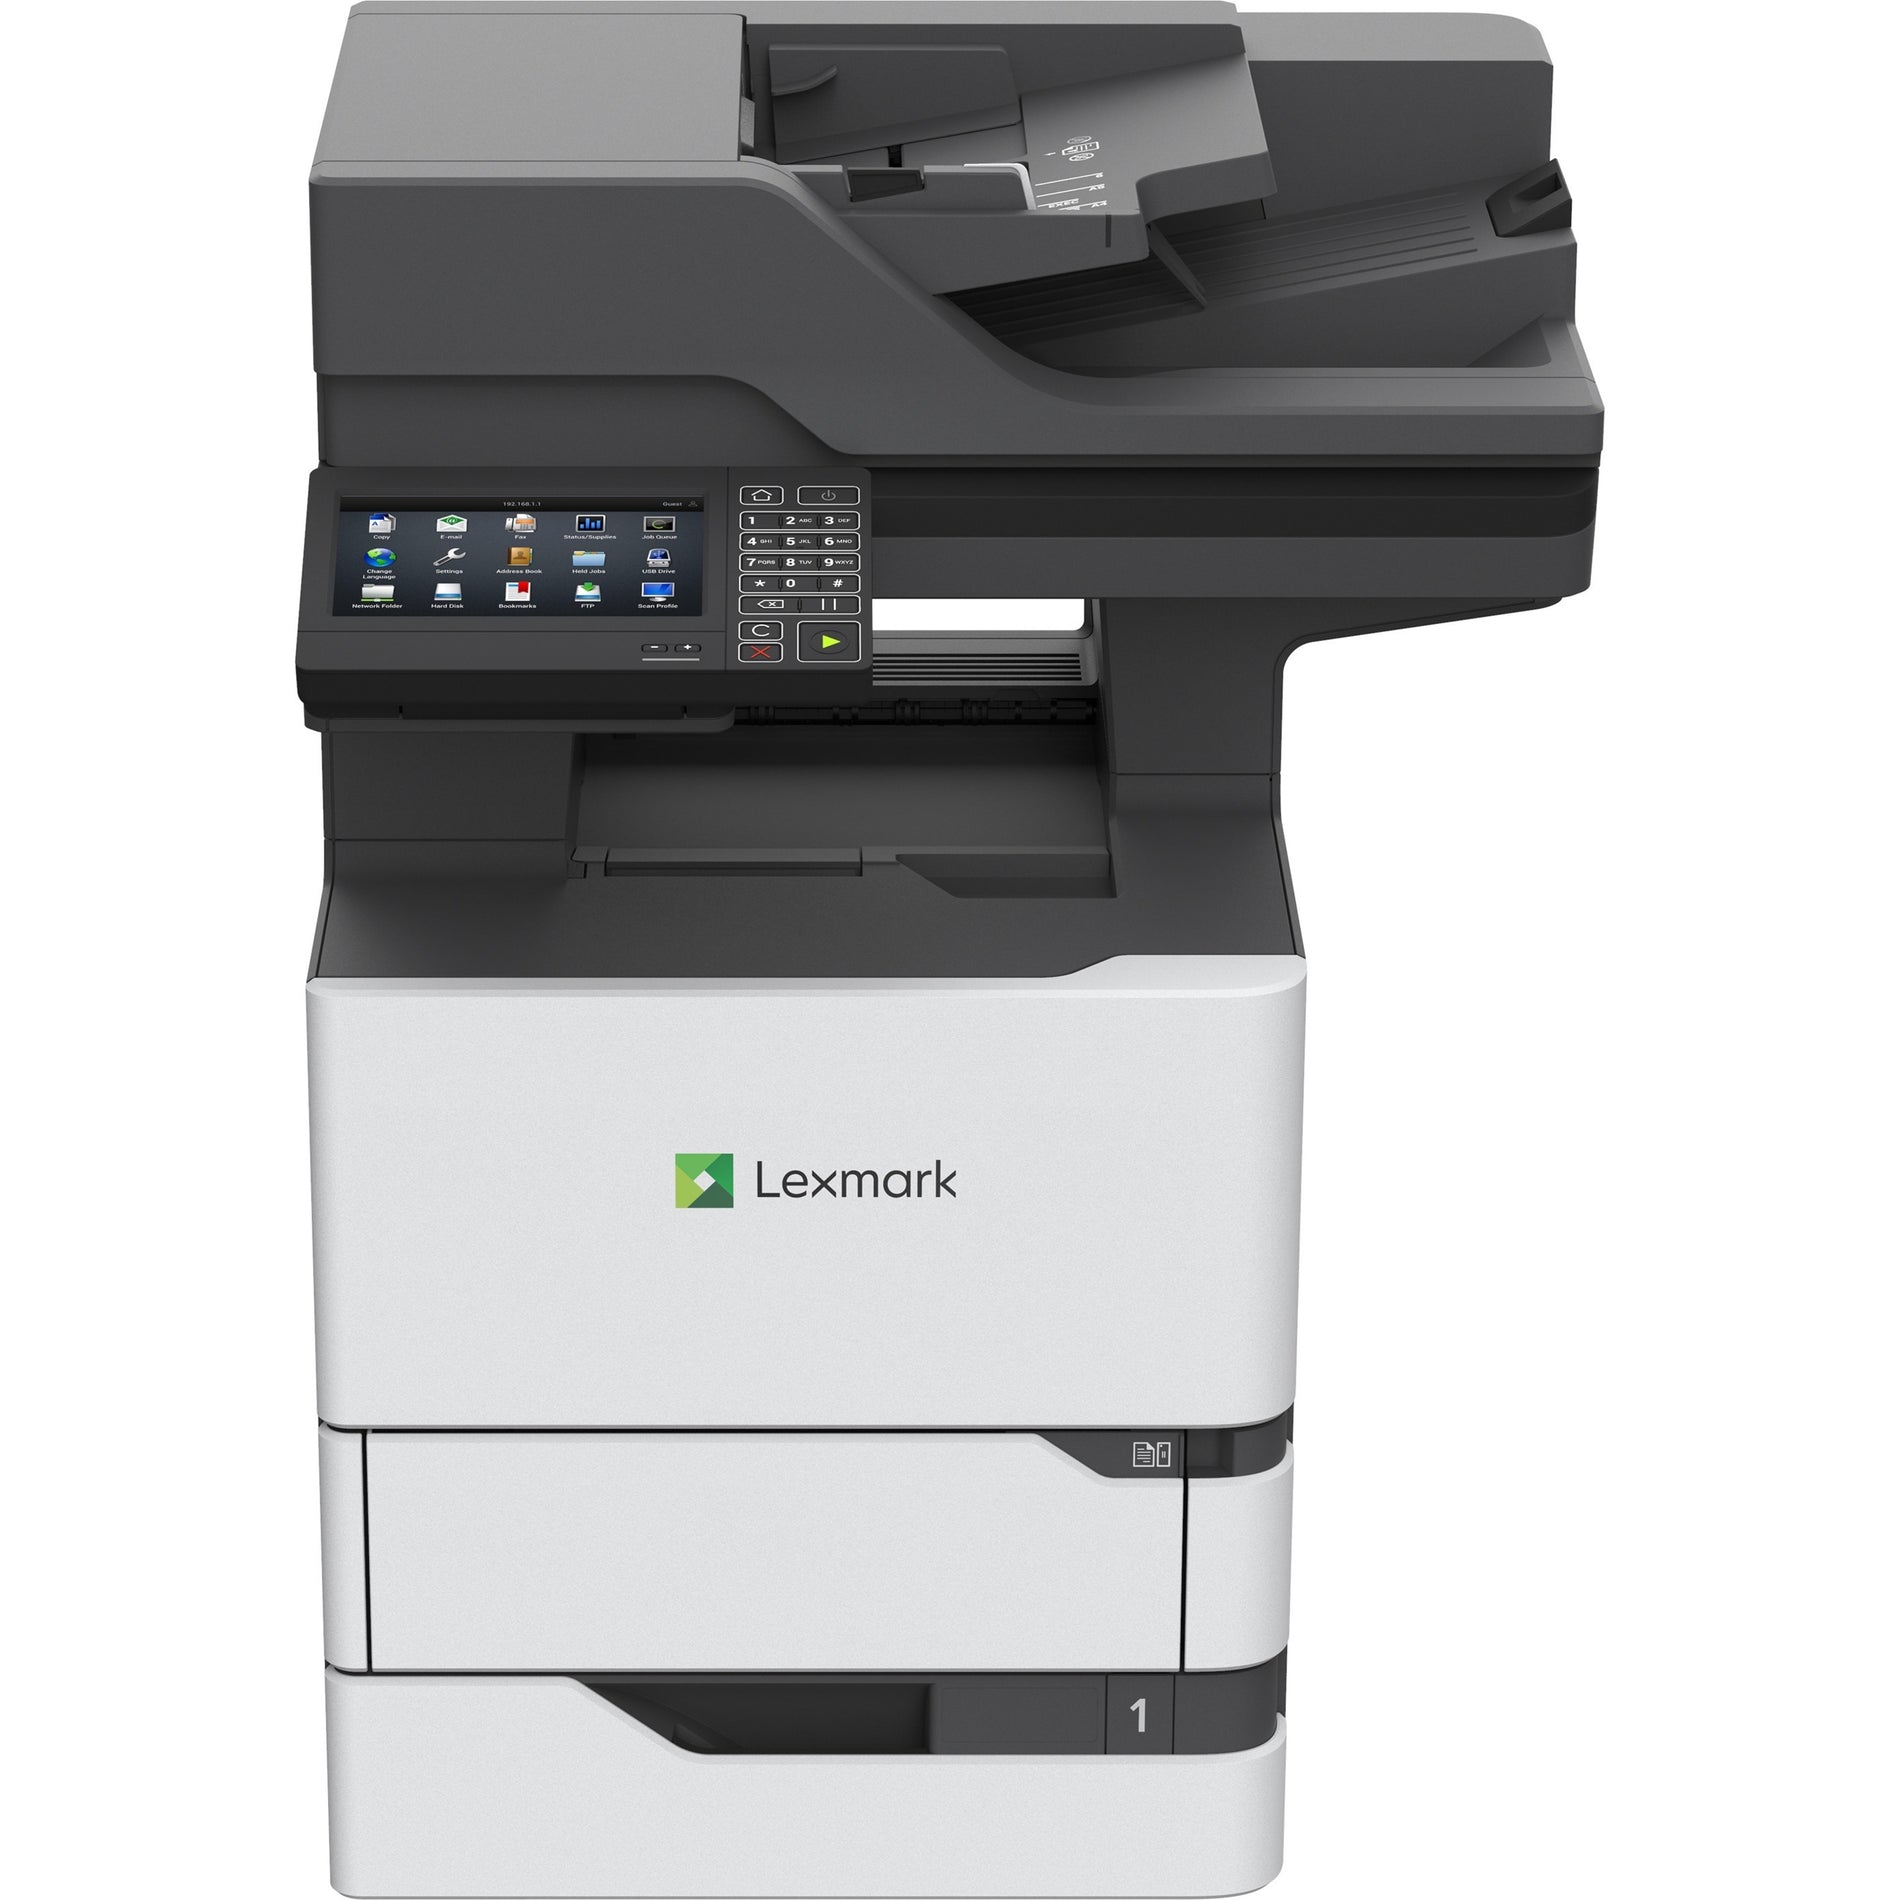 Lexmark 25B0001 MX722adhe Multifunction Laser Printer, Monochrome, 70 ppm, Automatic Duplex Print